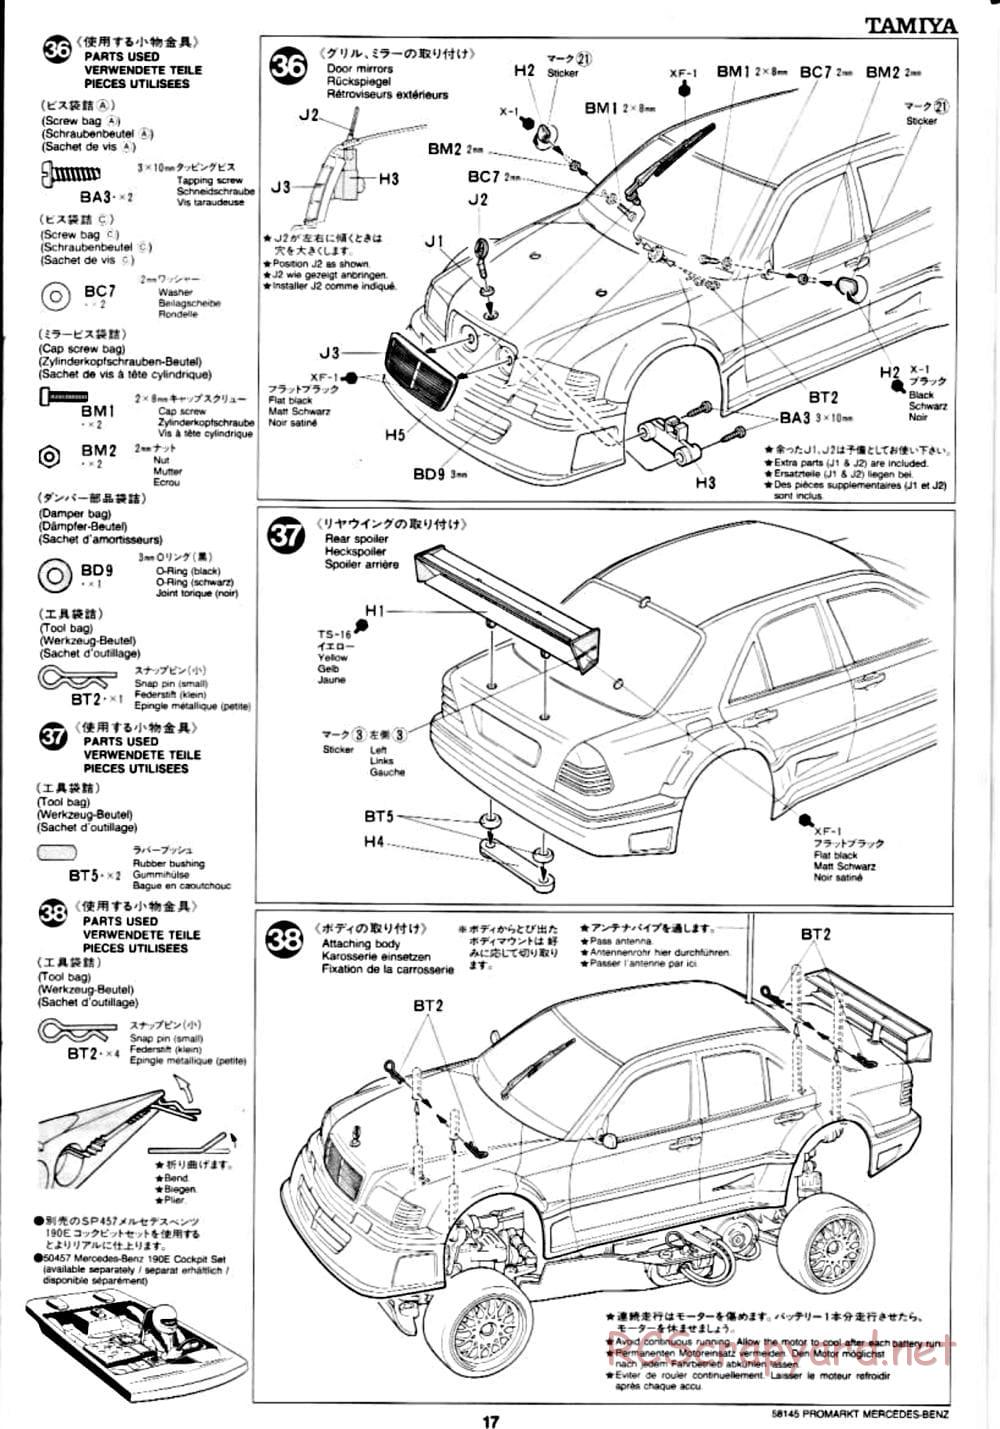 Tamiya - ProMarkt-Zakspeed AMG Mercedes C-Class DTM - TA-02 Chassis - Manual - Page 17